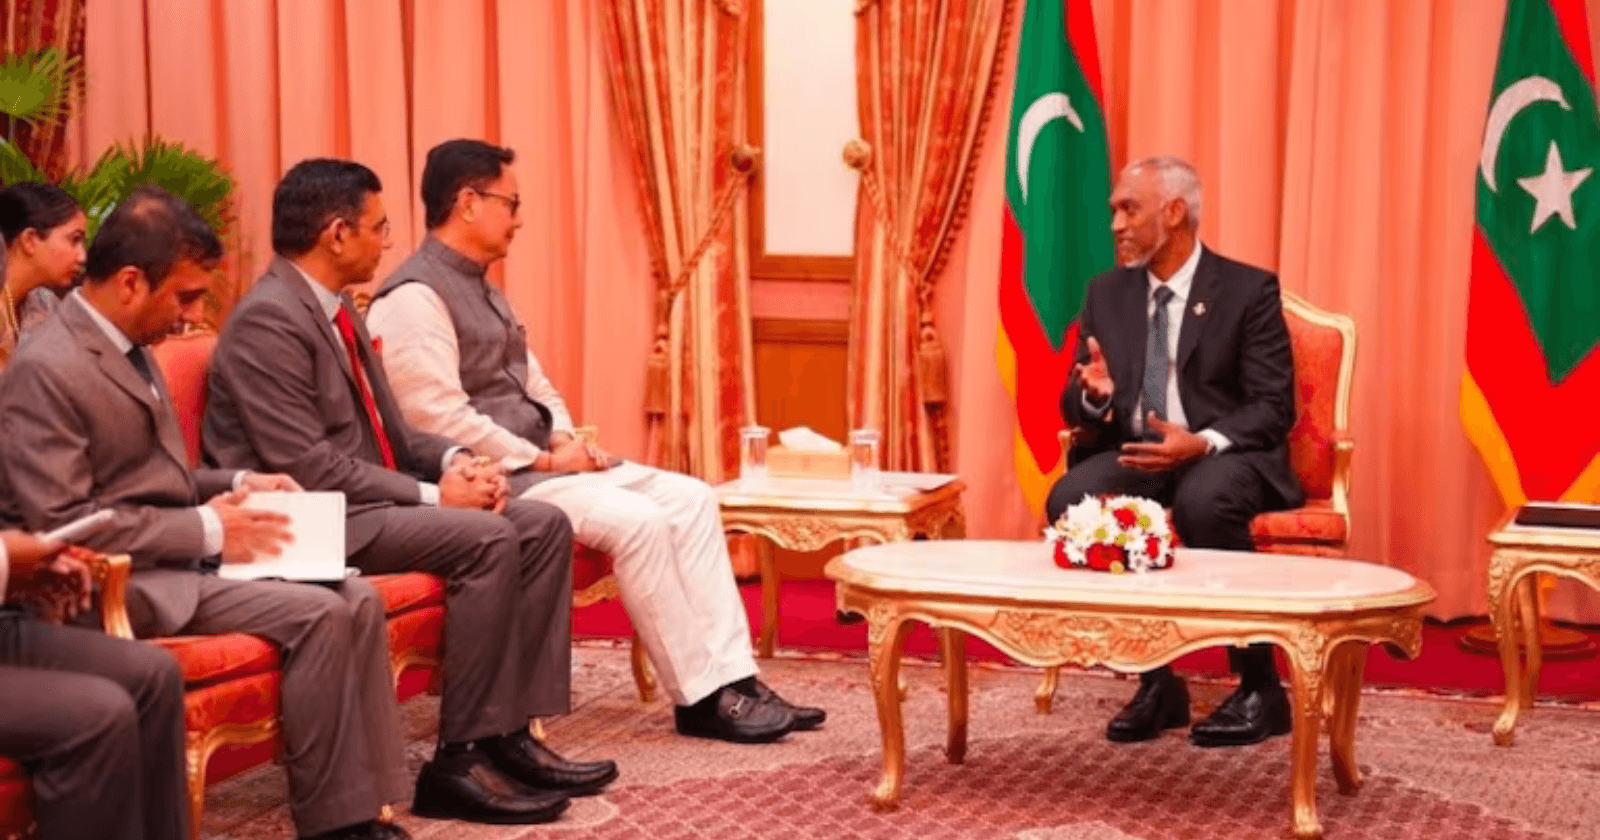 The India Maldives Diplomatic Row